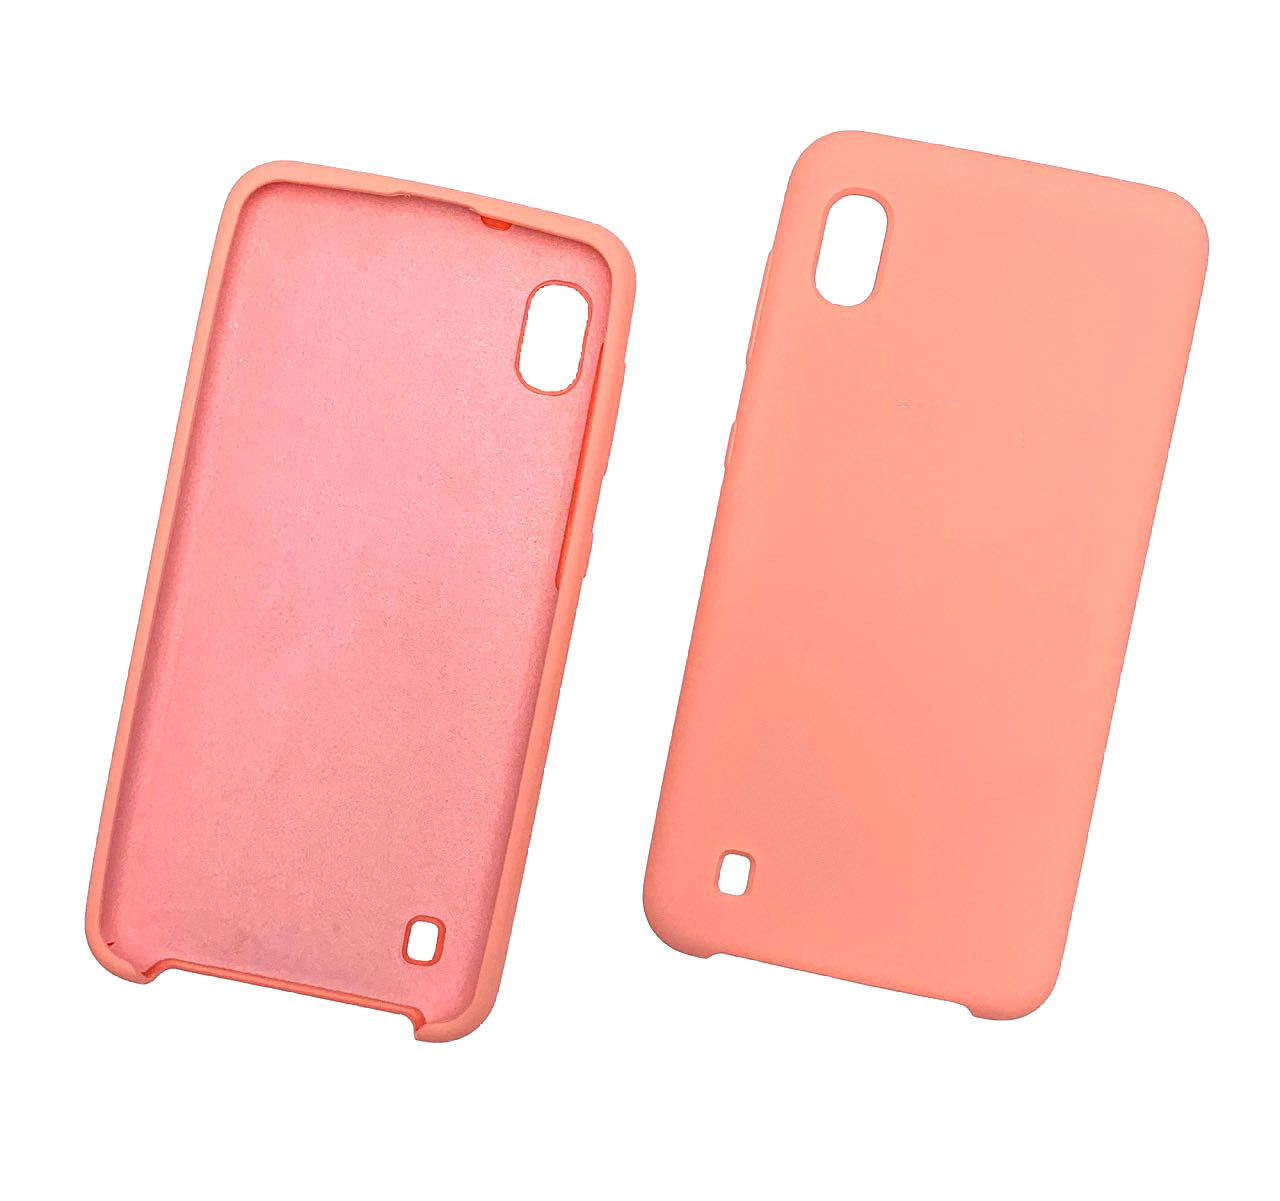 Чехол накладка Silicon Cover для Samsung A10 2019 (SM-A105), силикон, бархат, цвет светло розовый.